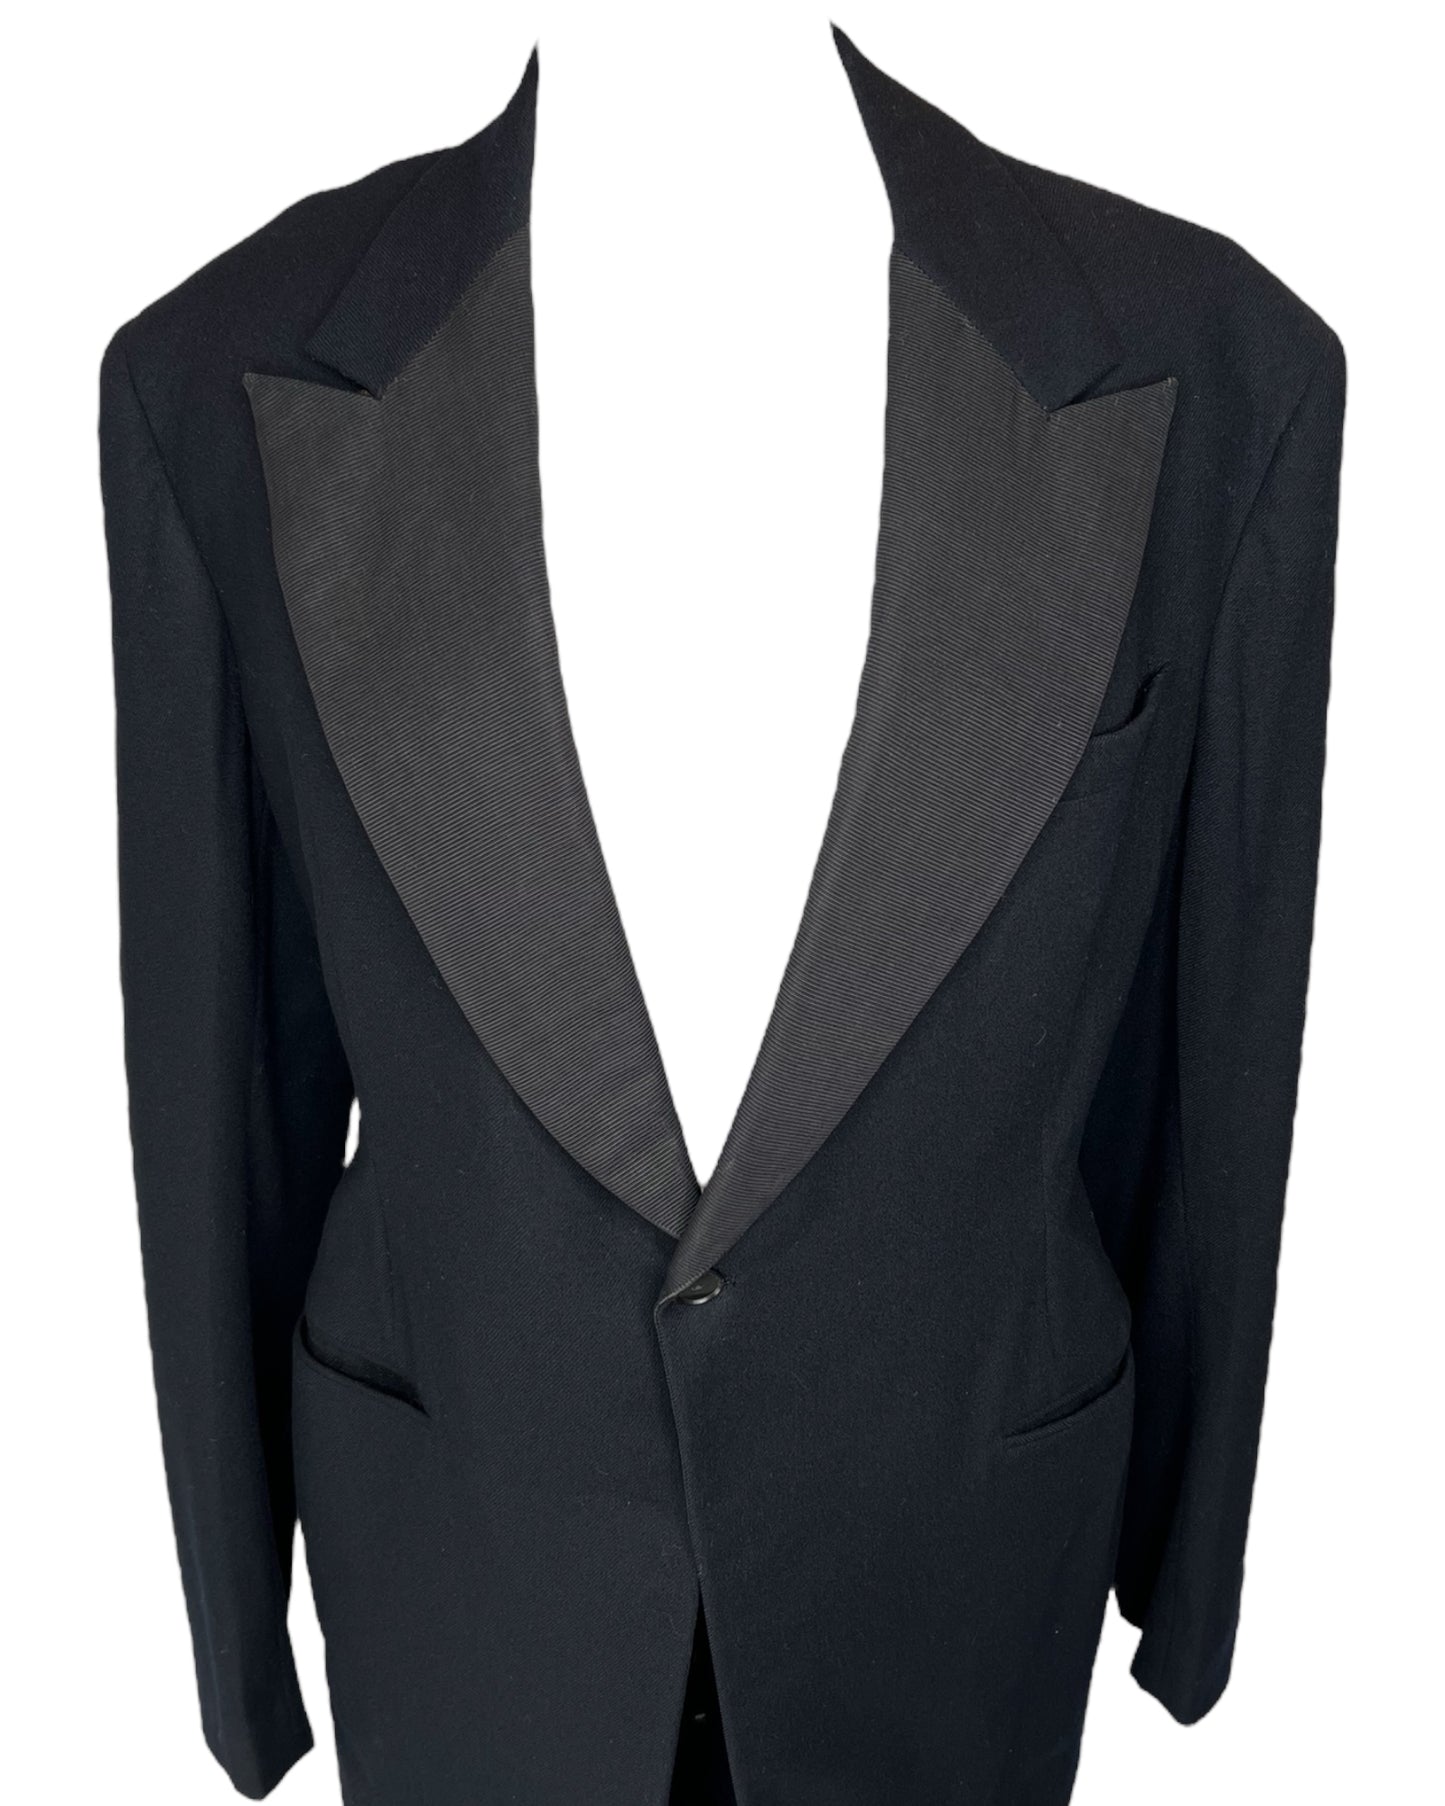 1930s Classic Black Wool Suit